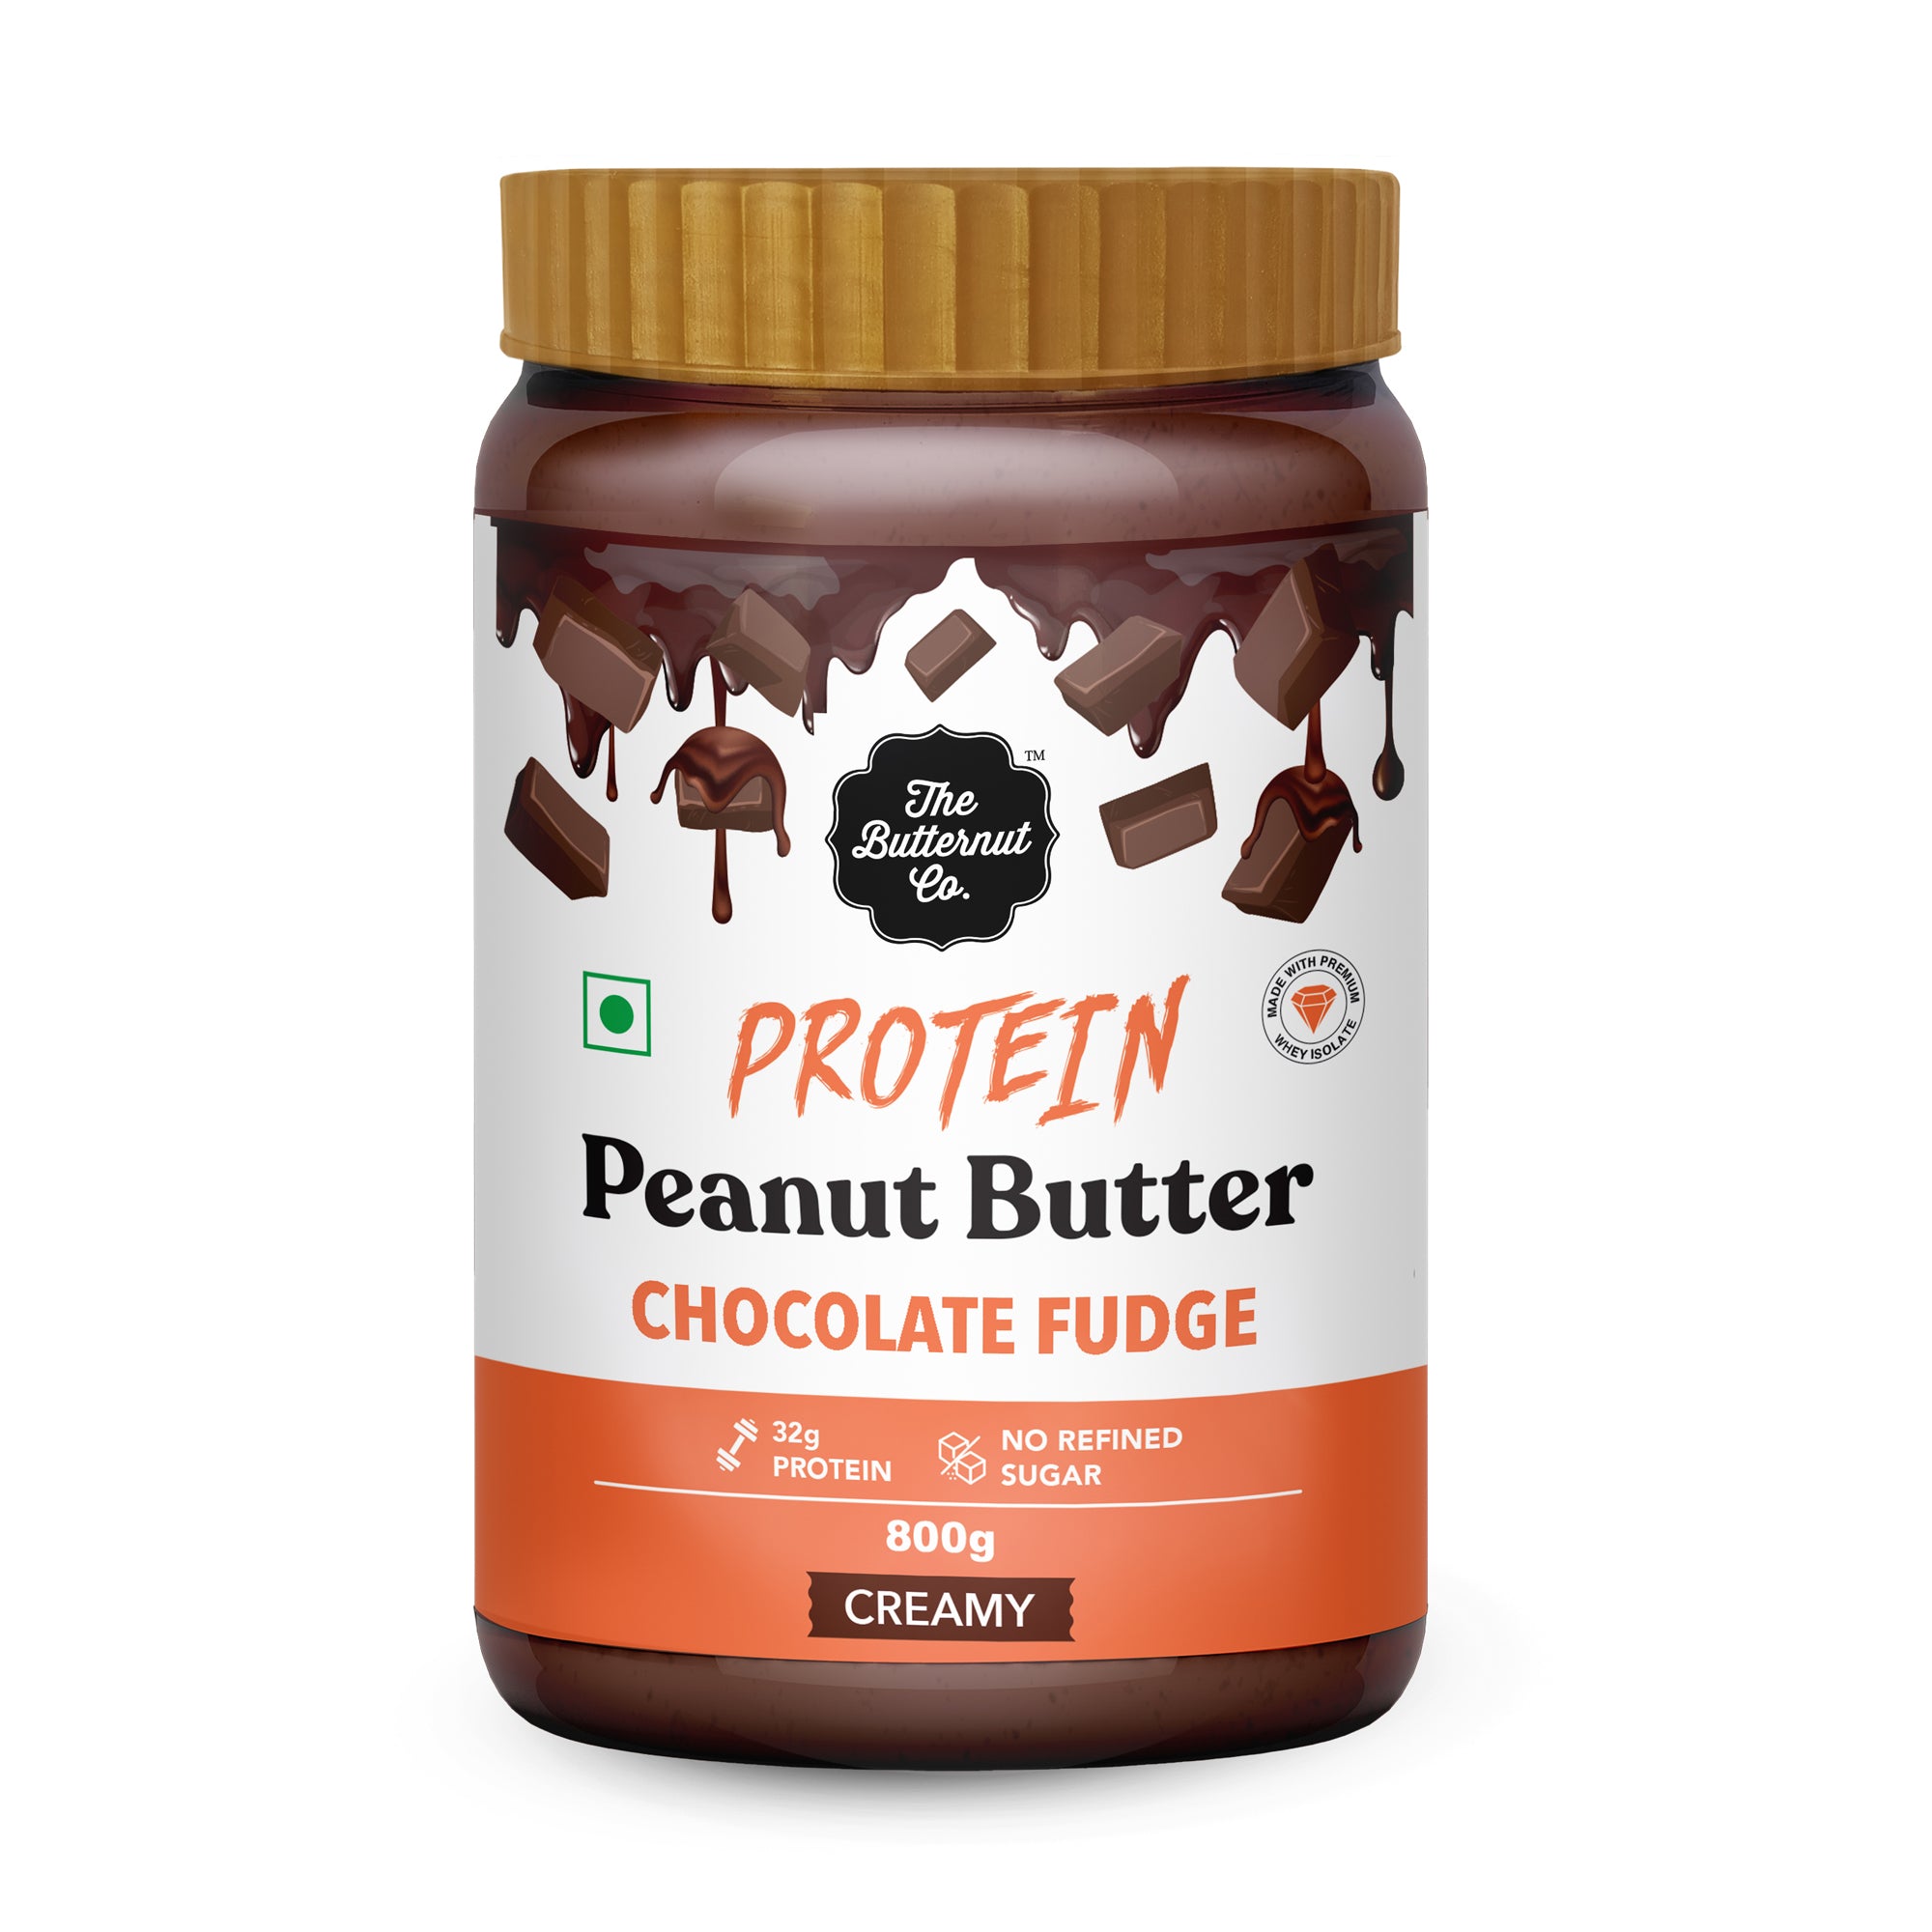 The Butternut Co. Protein Chocolate Fudge Peanut Butter Creamy 800gms